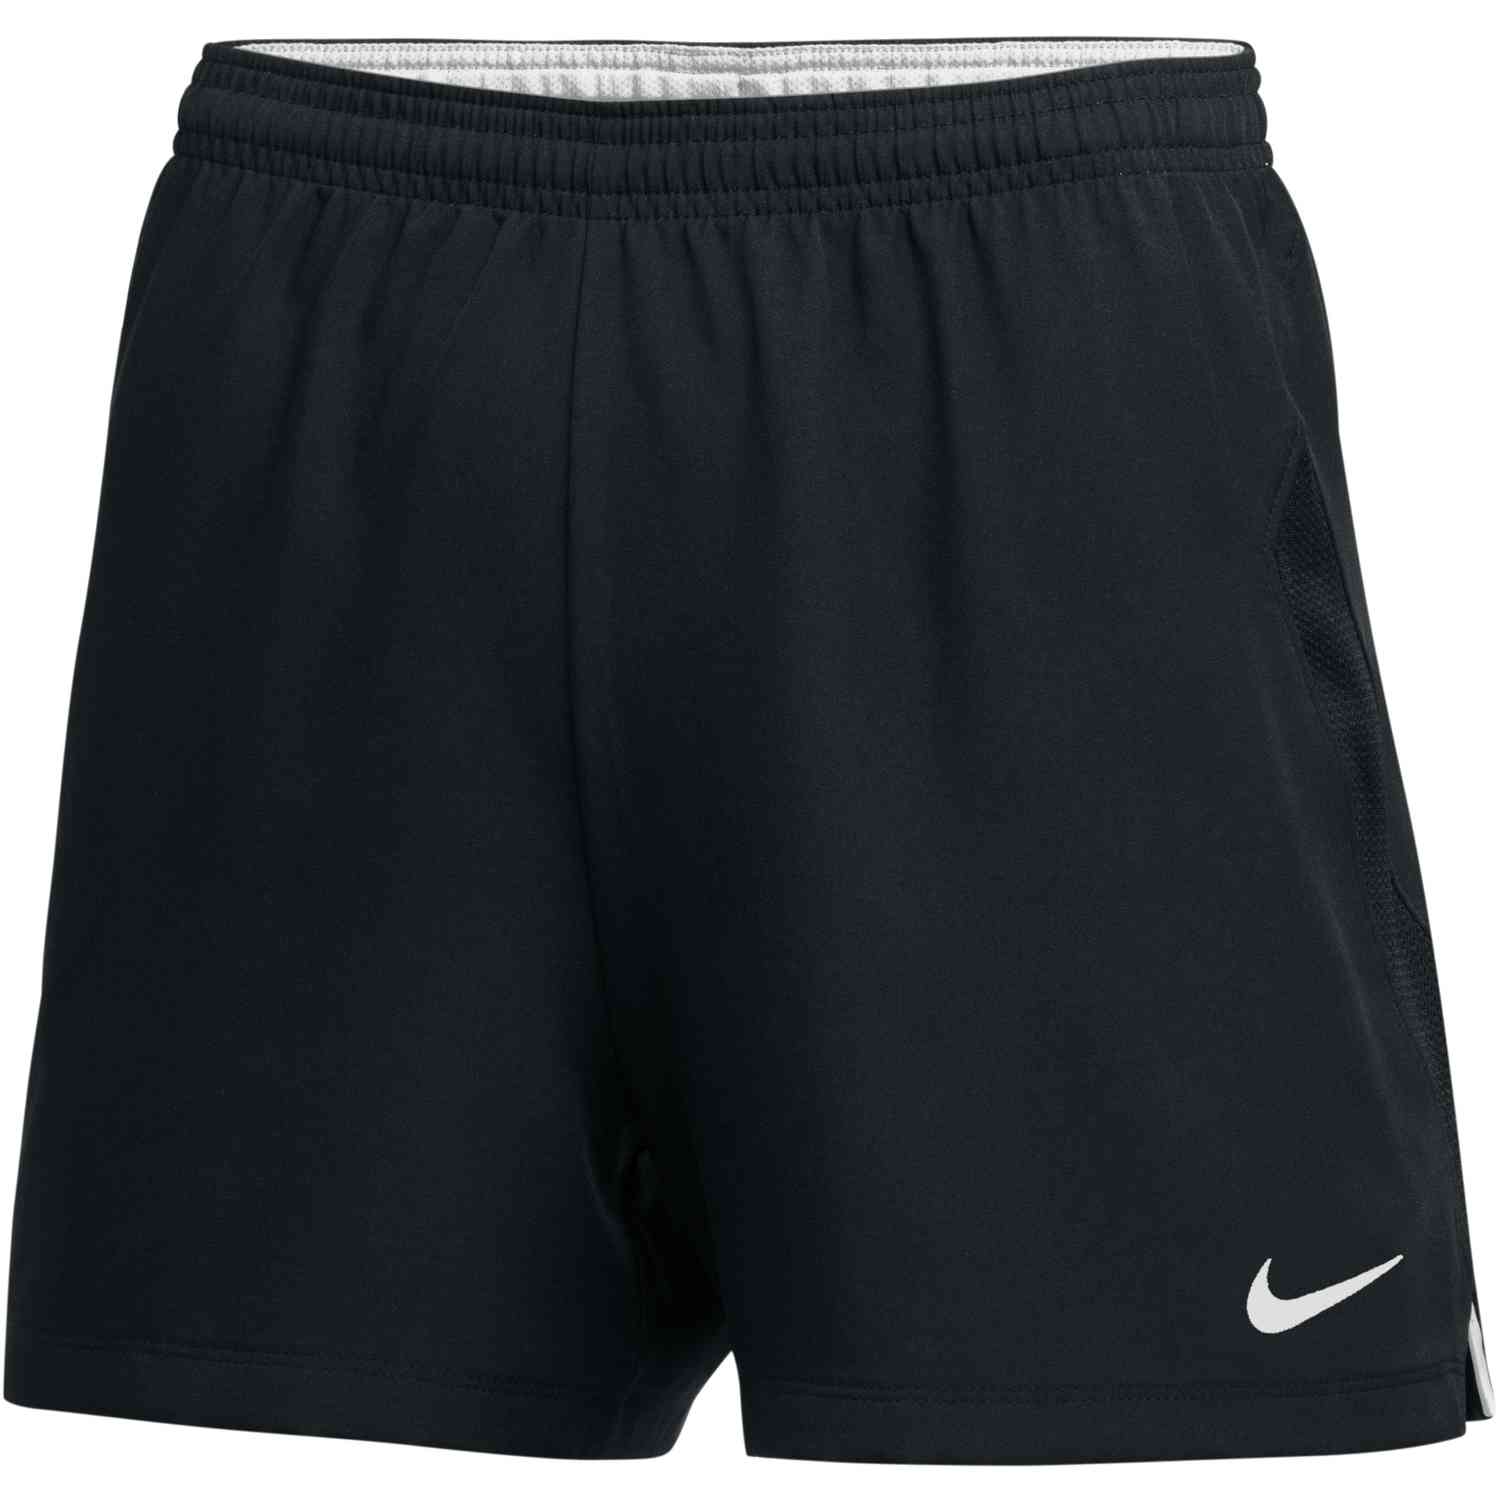 Buy > nike womens soccer shorts > in stock